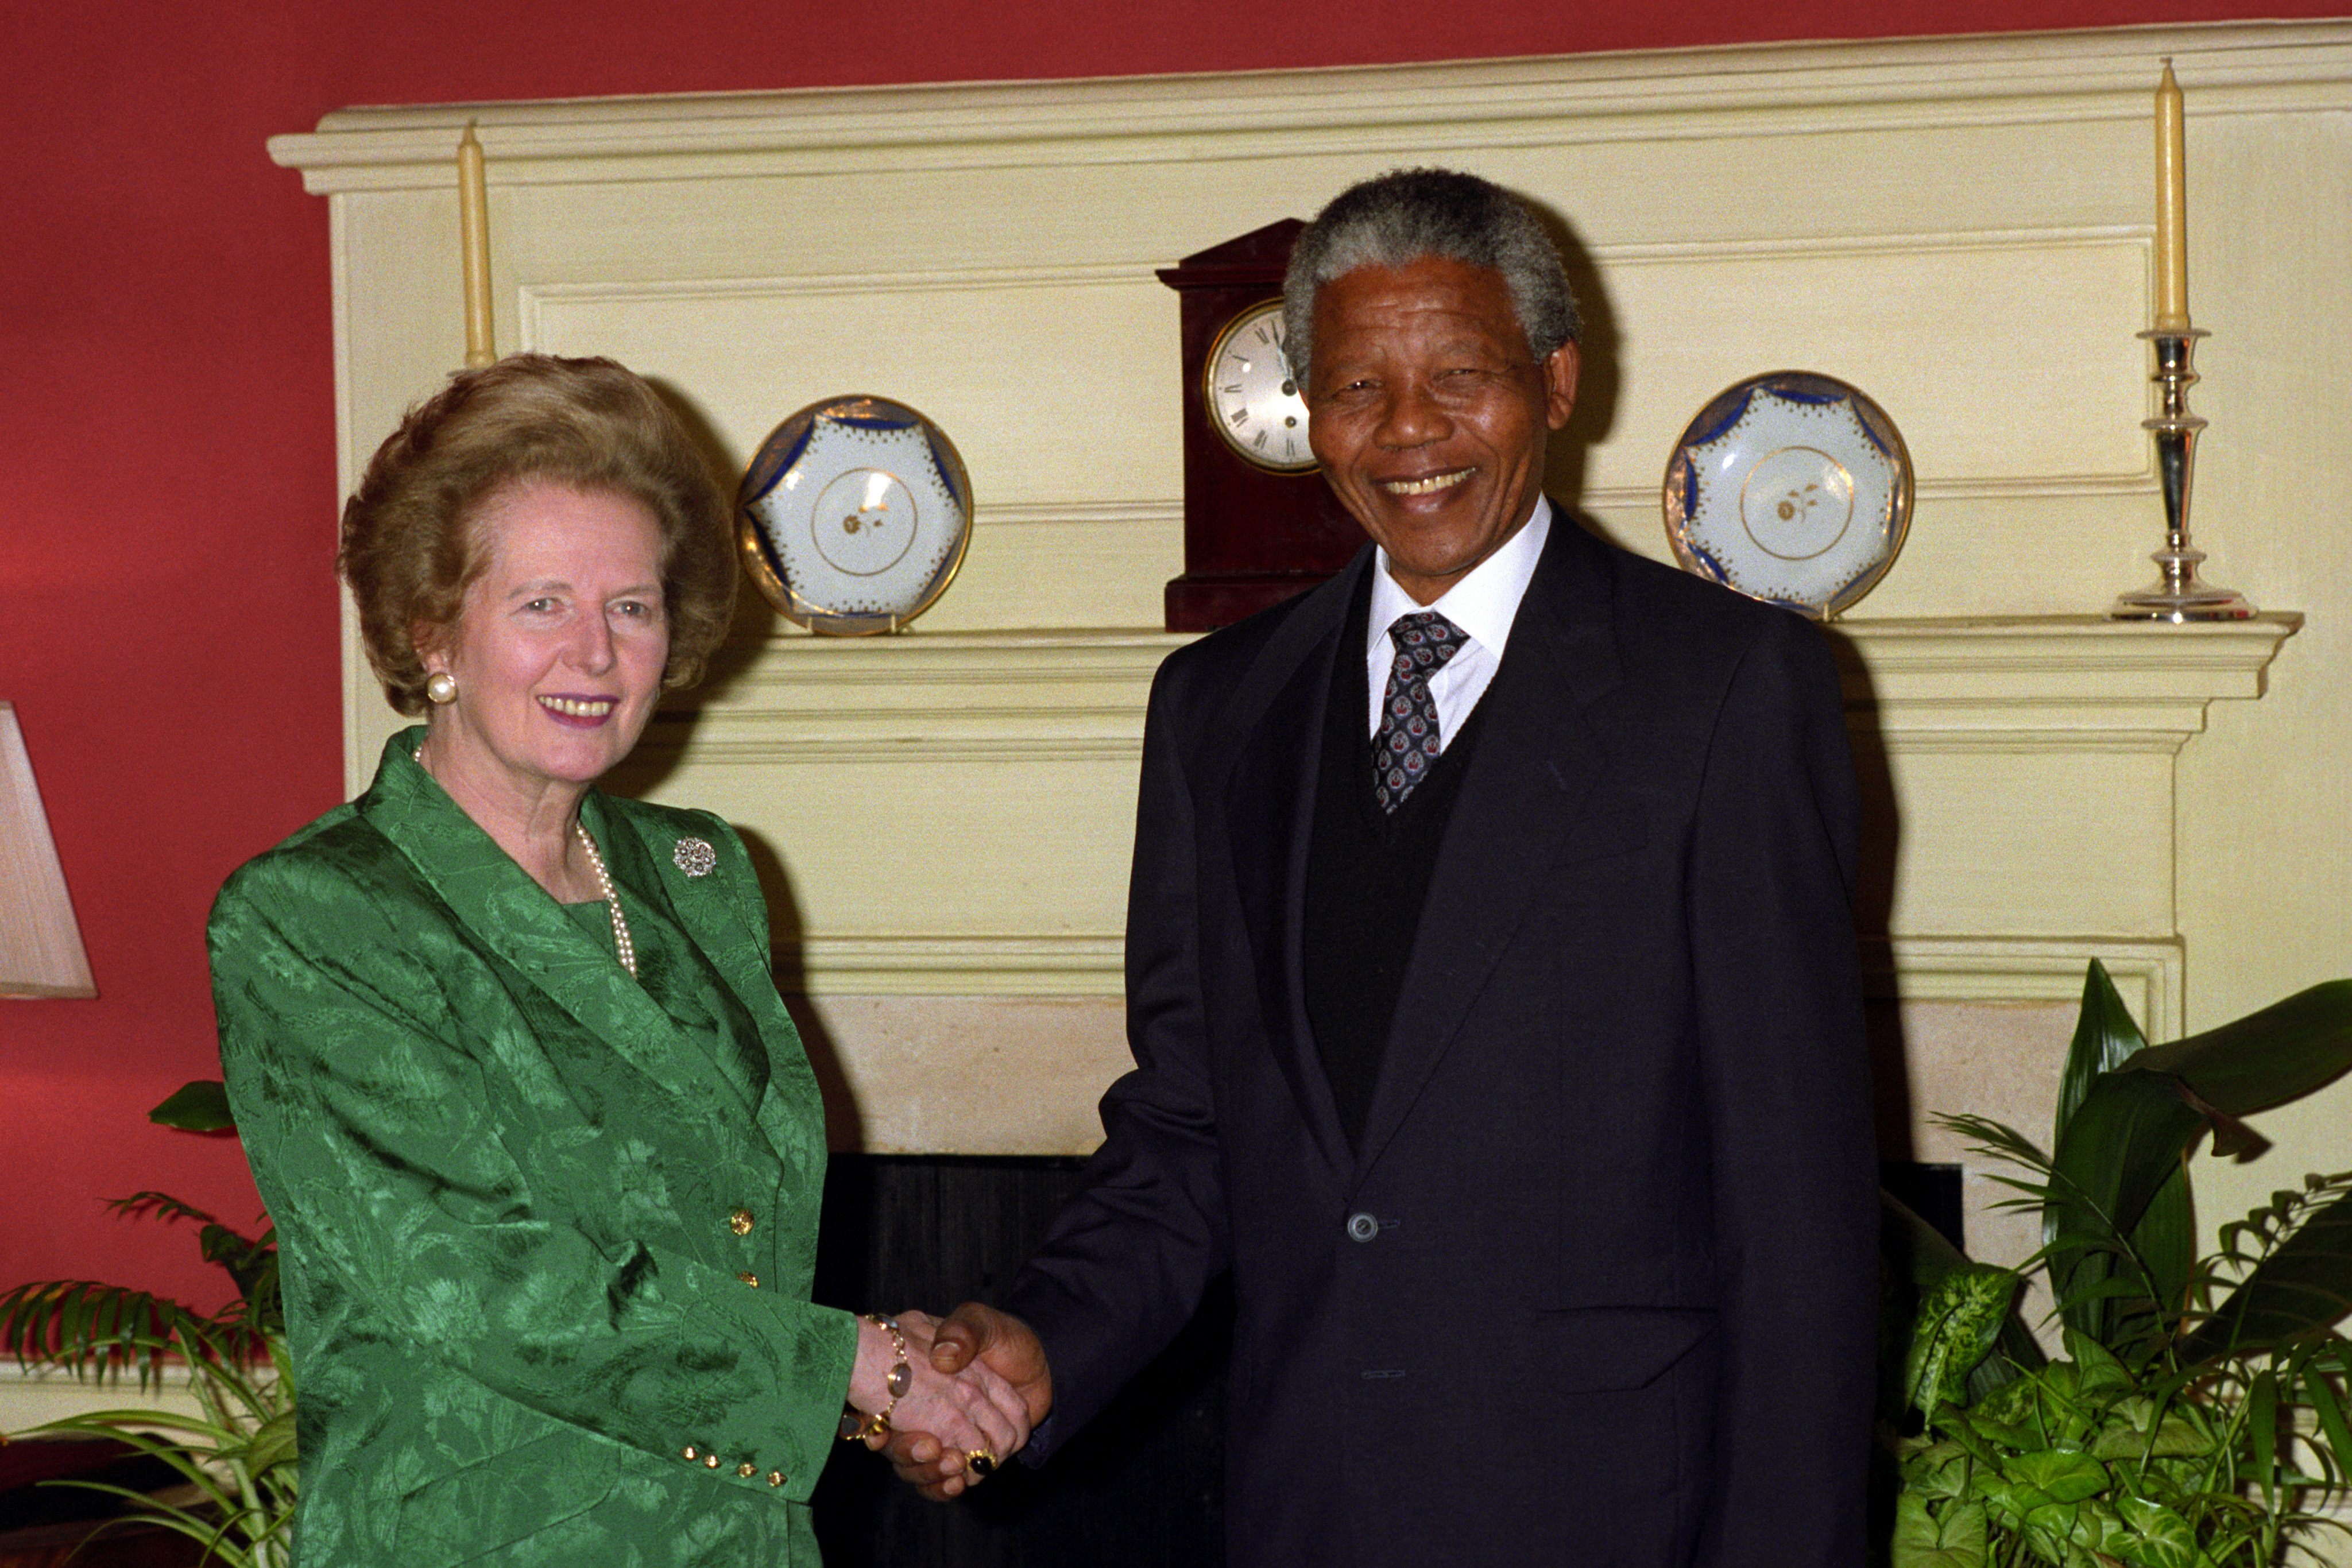 Nelson Mandela meeting Margaret Thatcher in 1990 